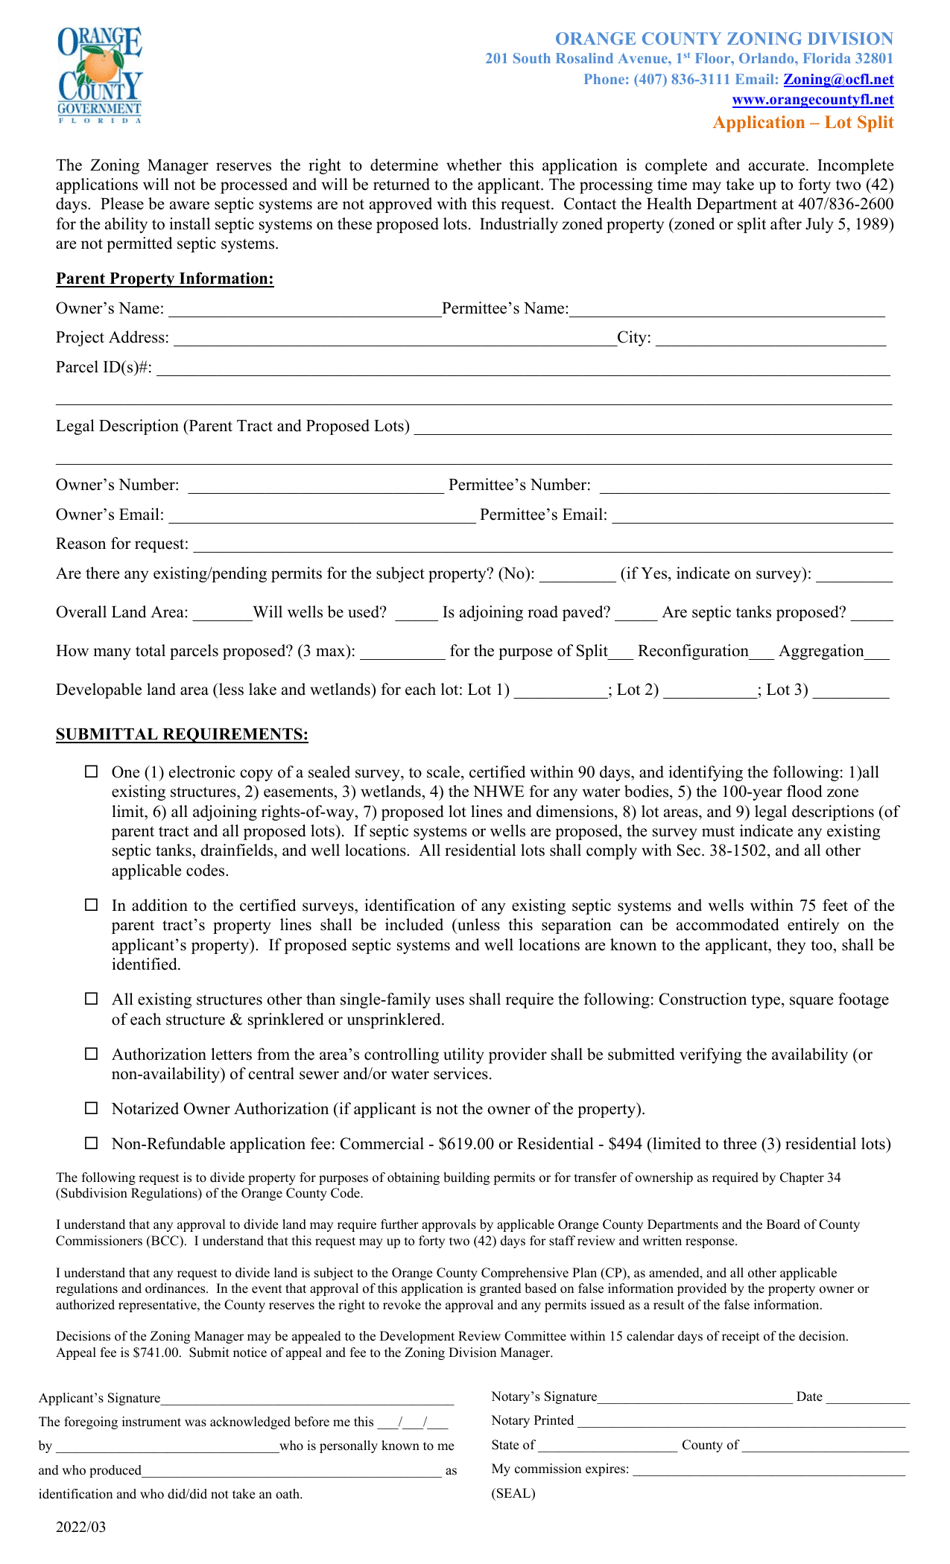 Application - Lot Split - Orange County, Florida, Page 1